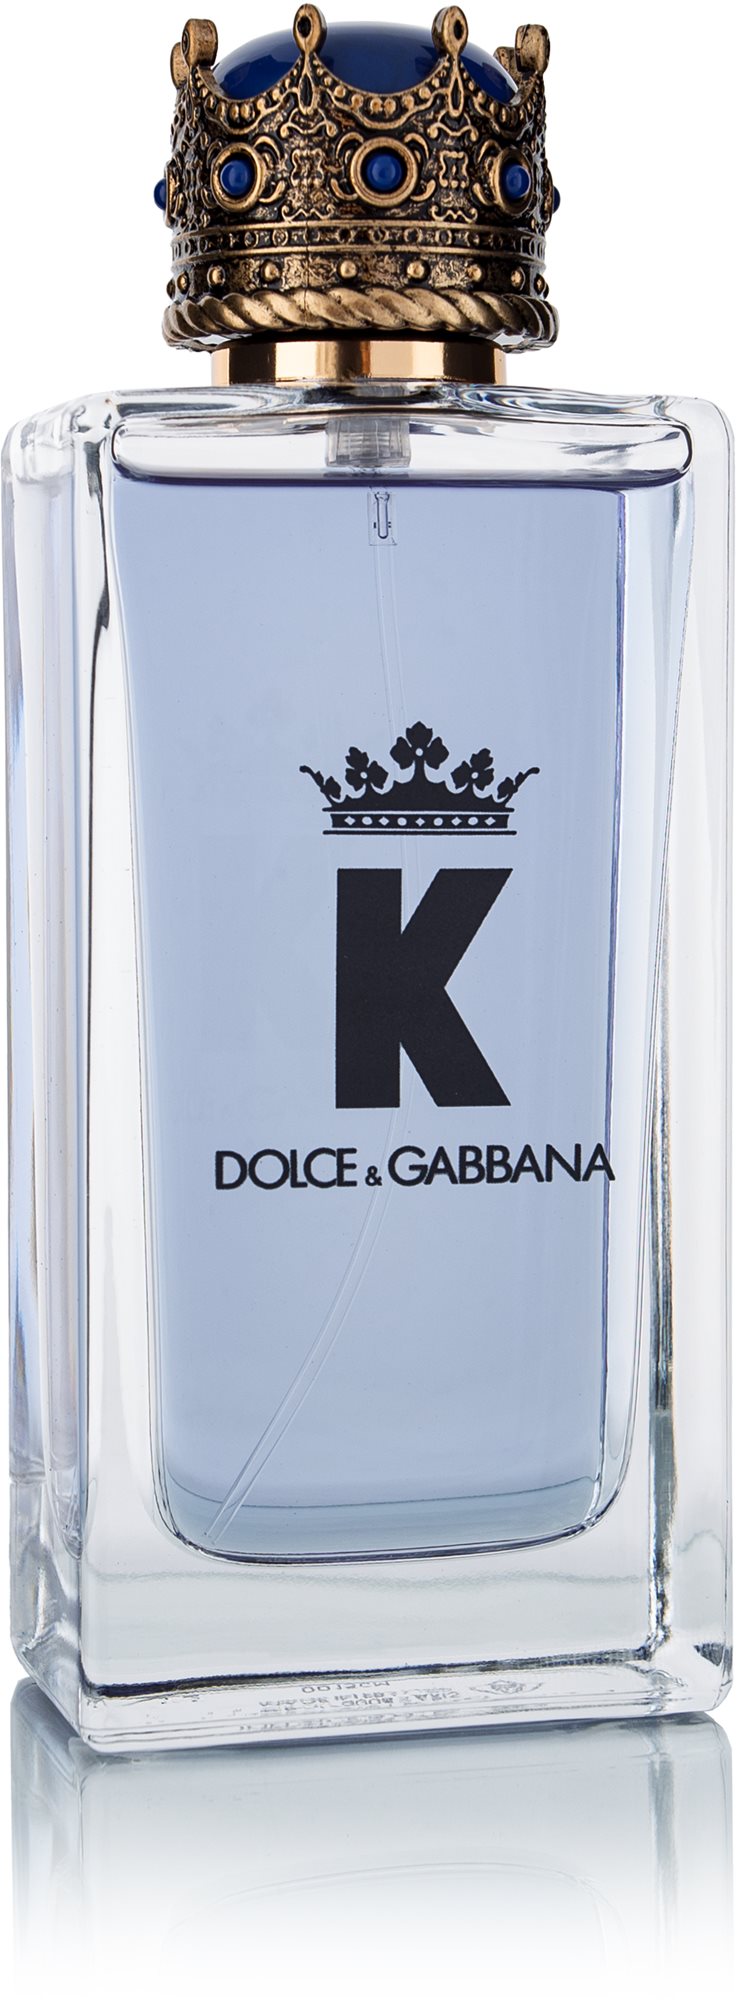 DOLCE & GABBANA K by Dolce & Gabbana EdT 100 ml